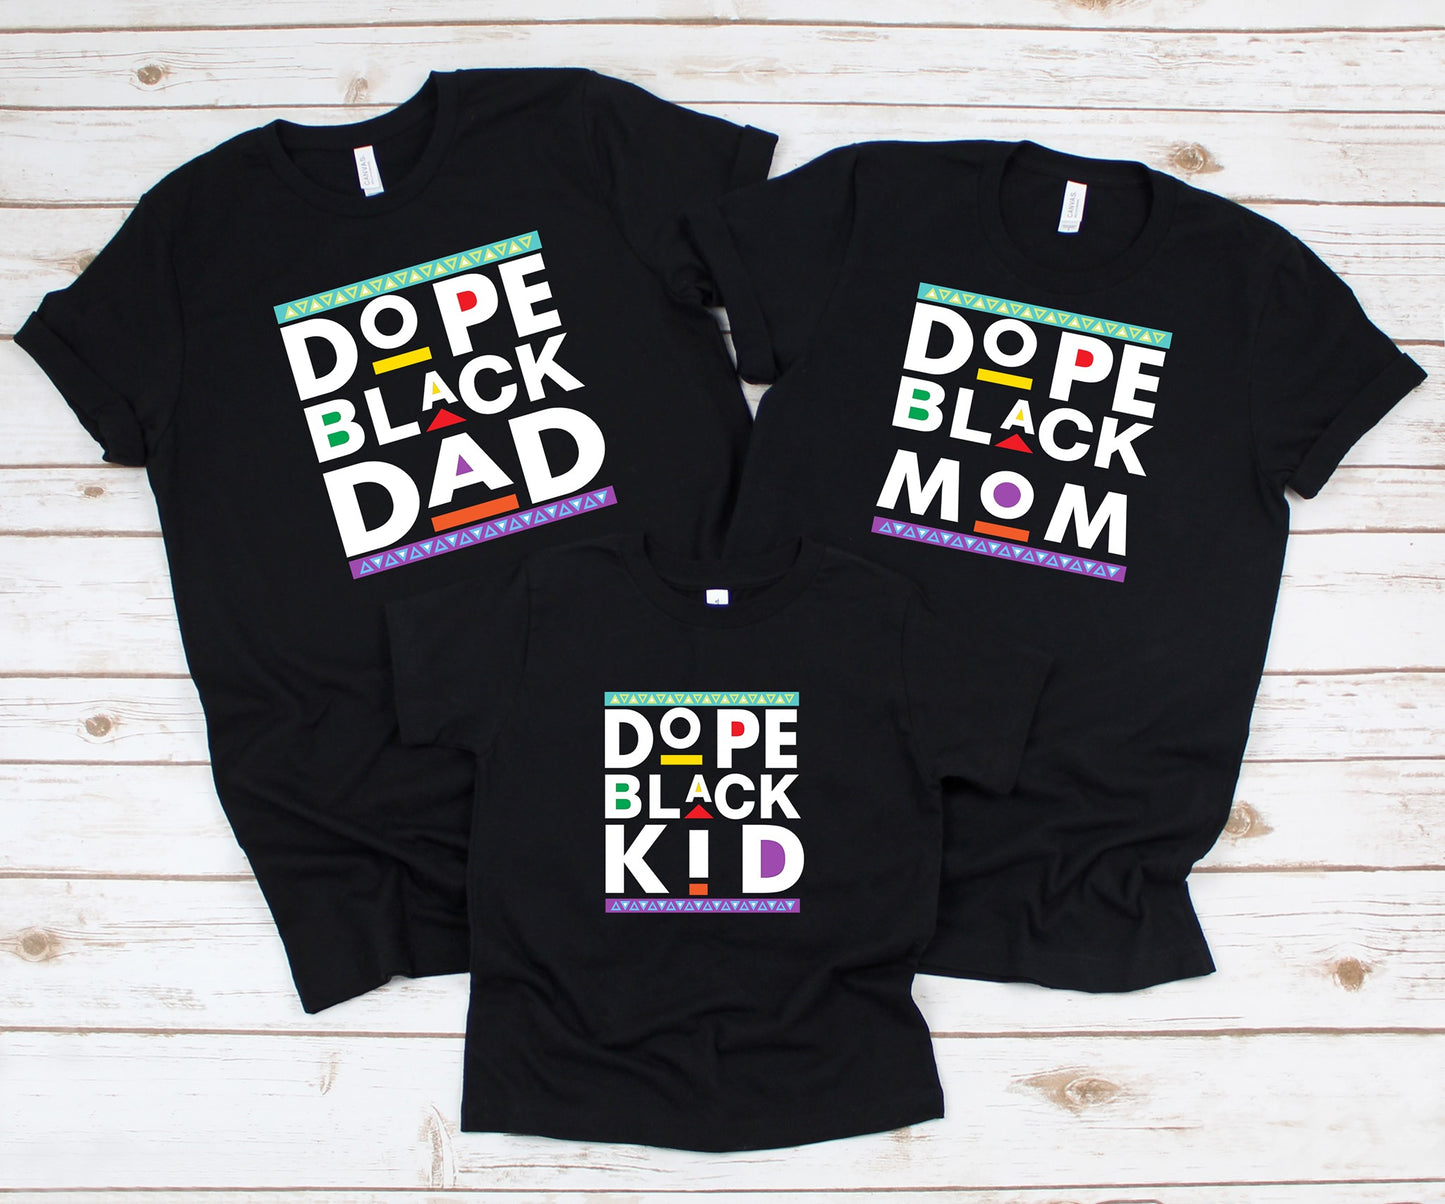 Dope Black Mom, Dad, Kid